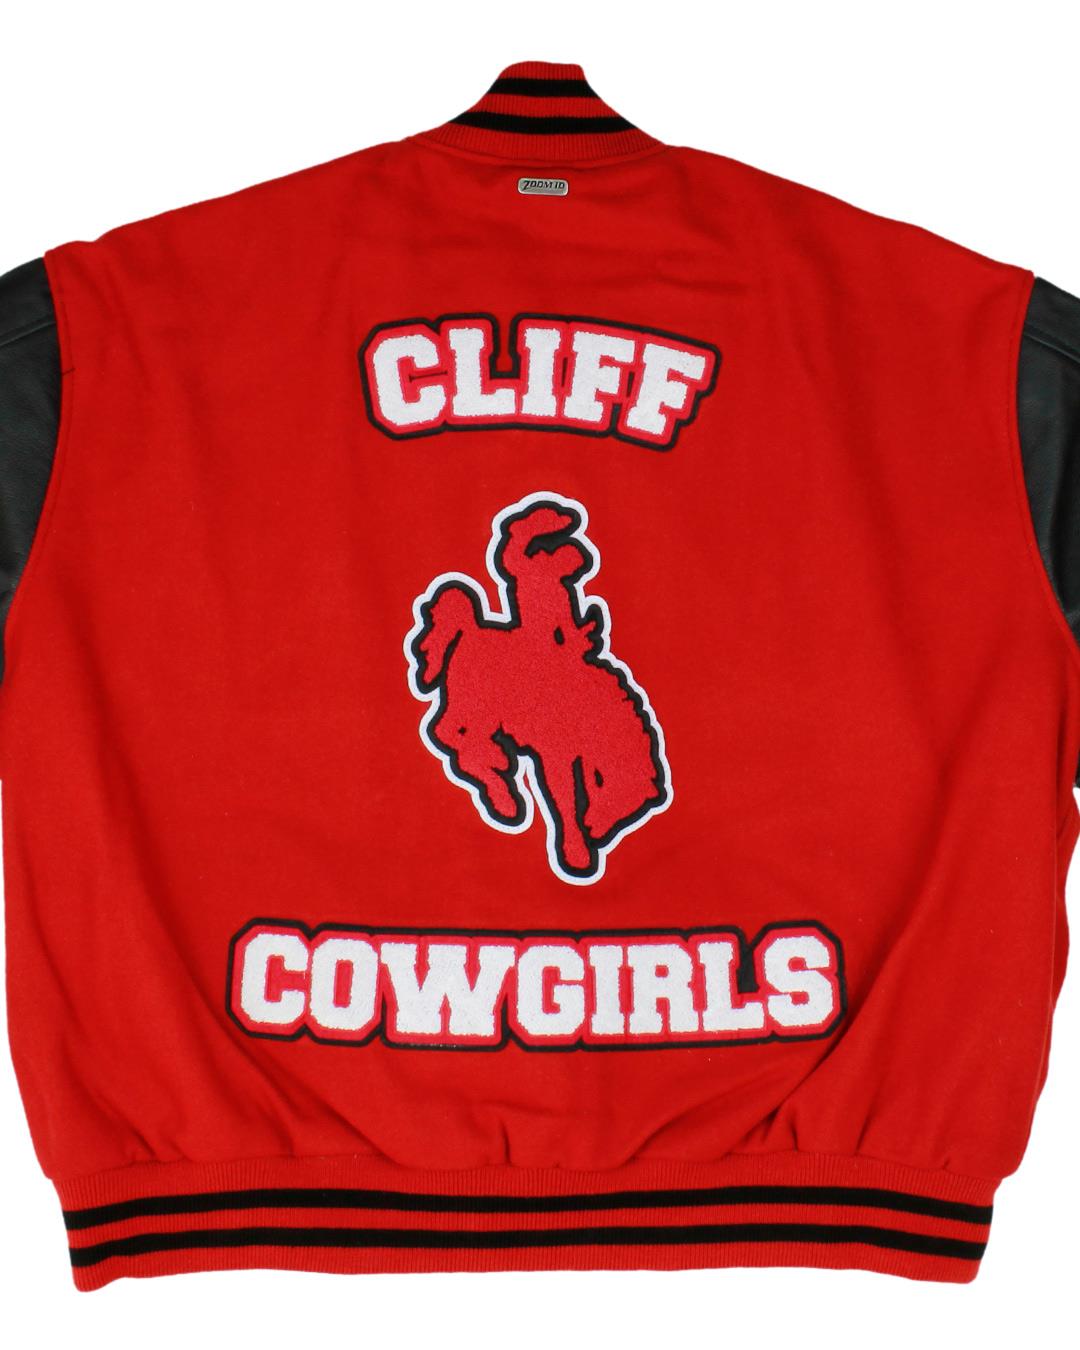 Cliff High School Varsity Jacket, Cliff, NM - Back